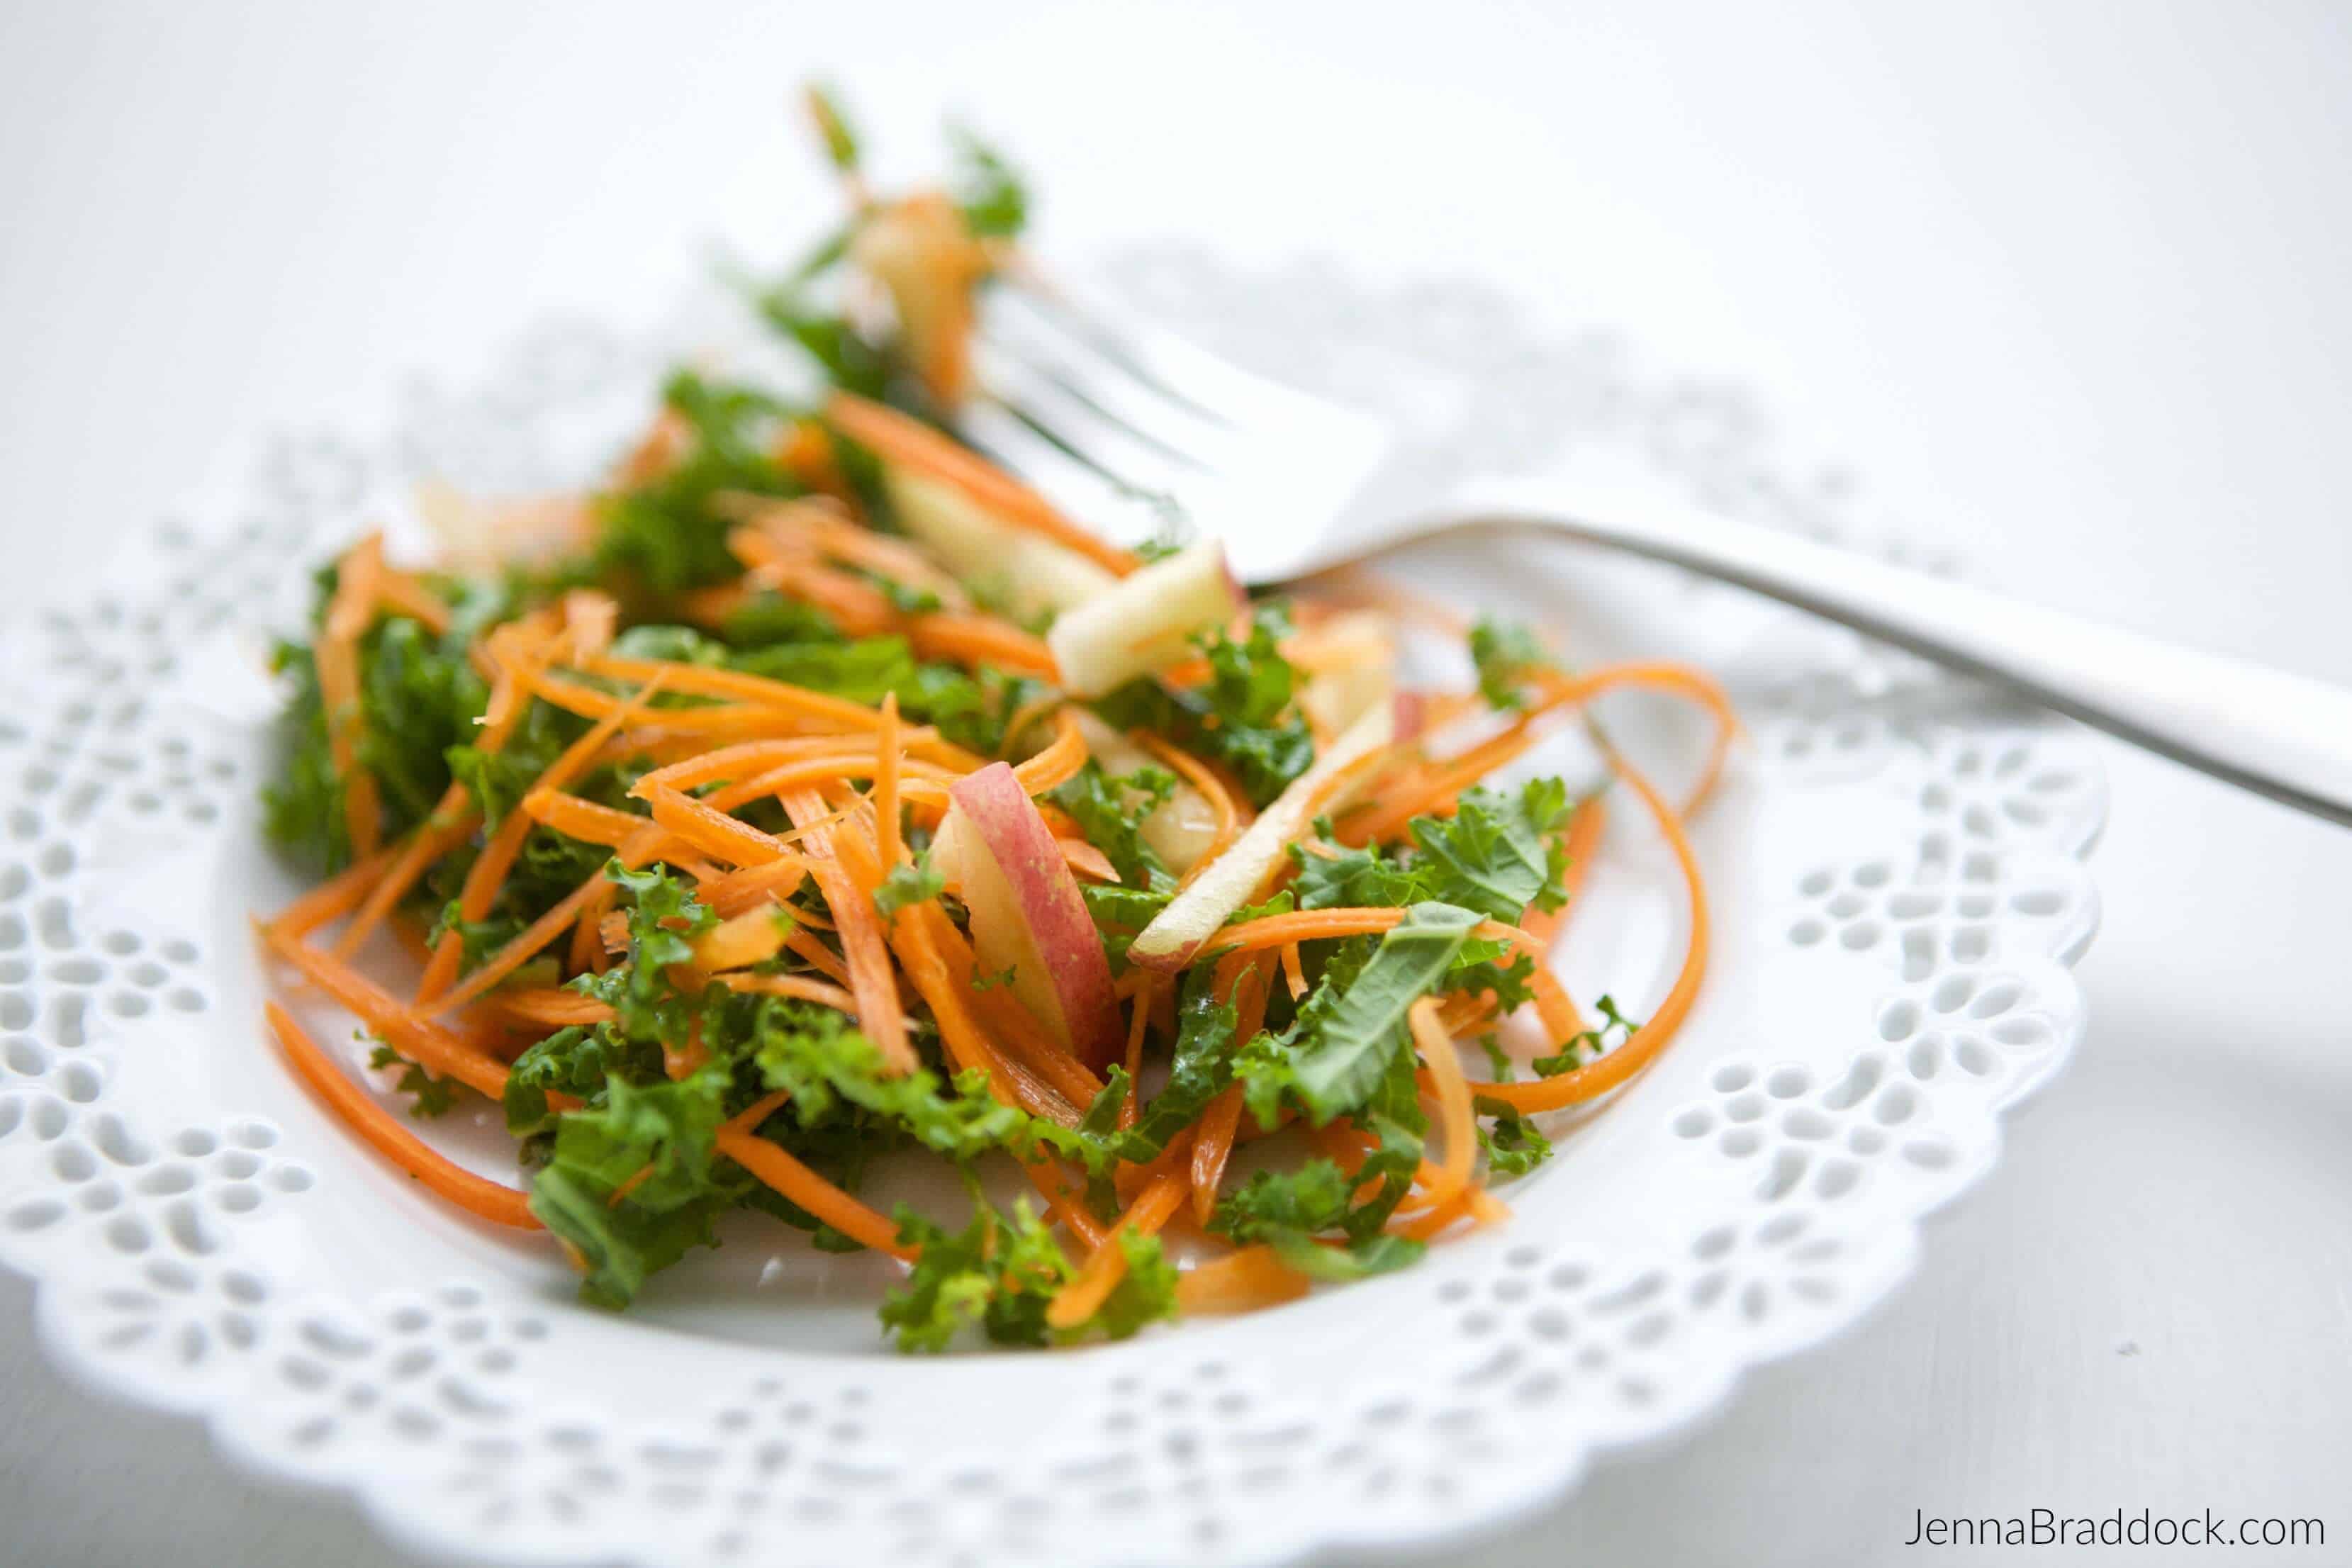 https://jennabraddock.com/wp-content/uploads/2016/01/Kale-carrot-apple-salad-MHE.jpg